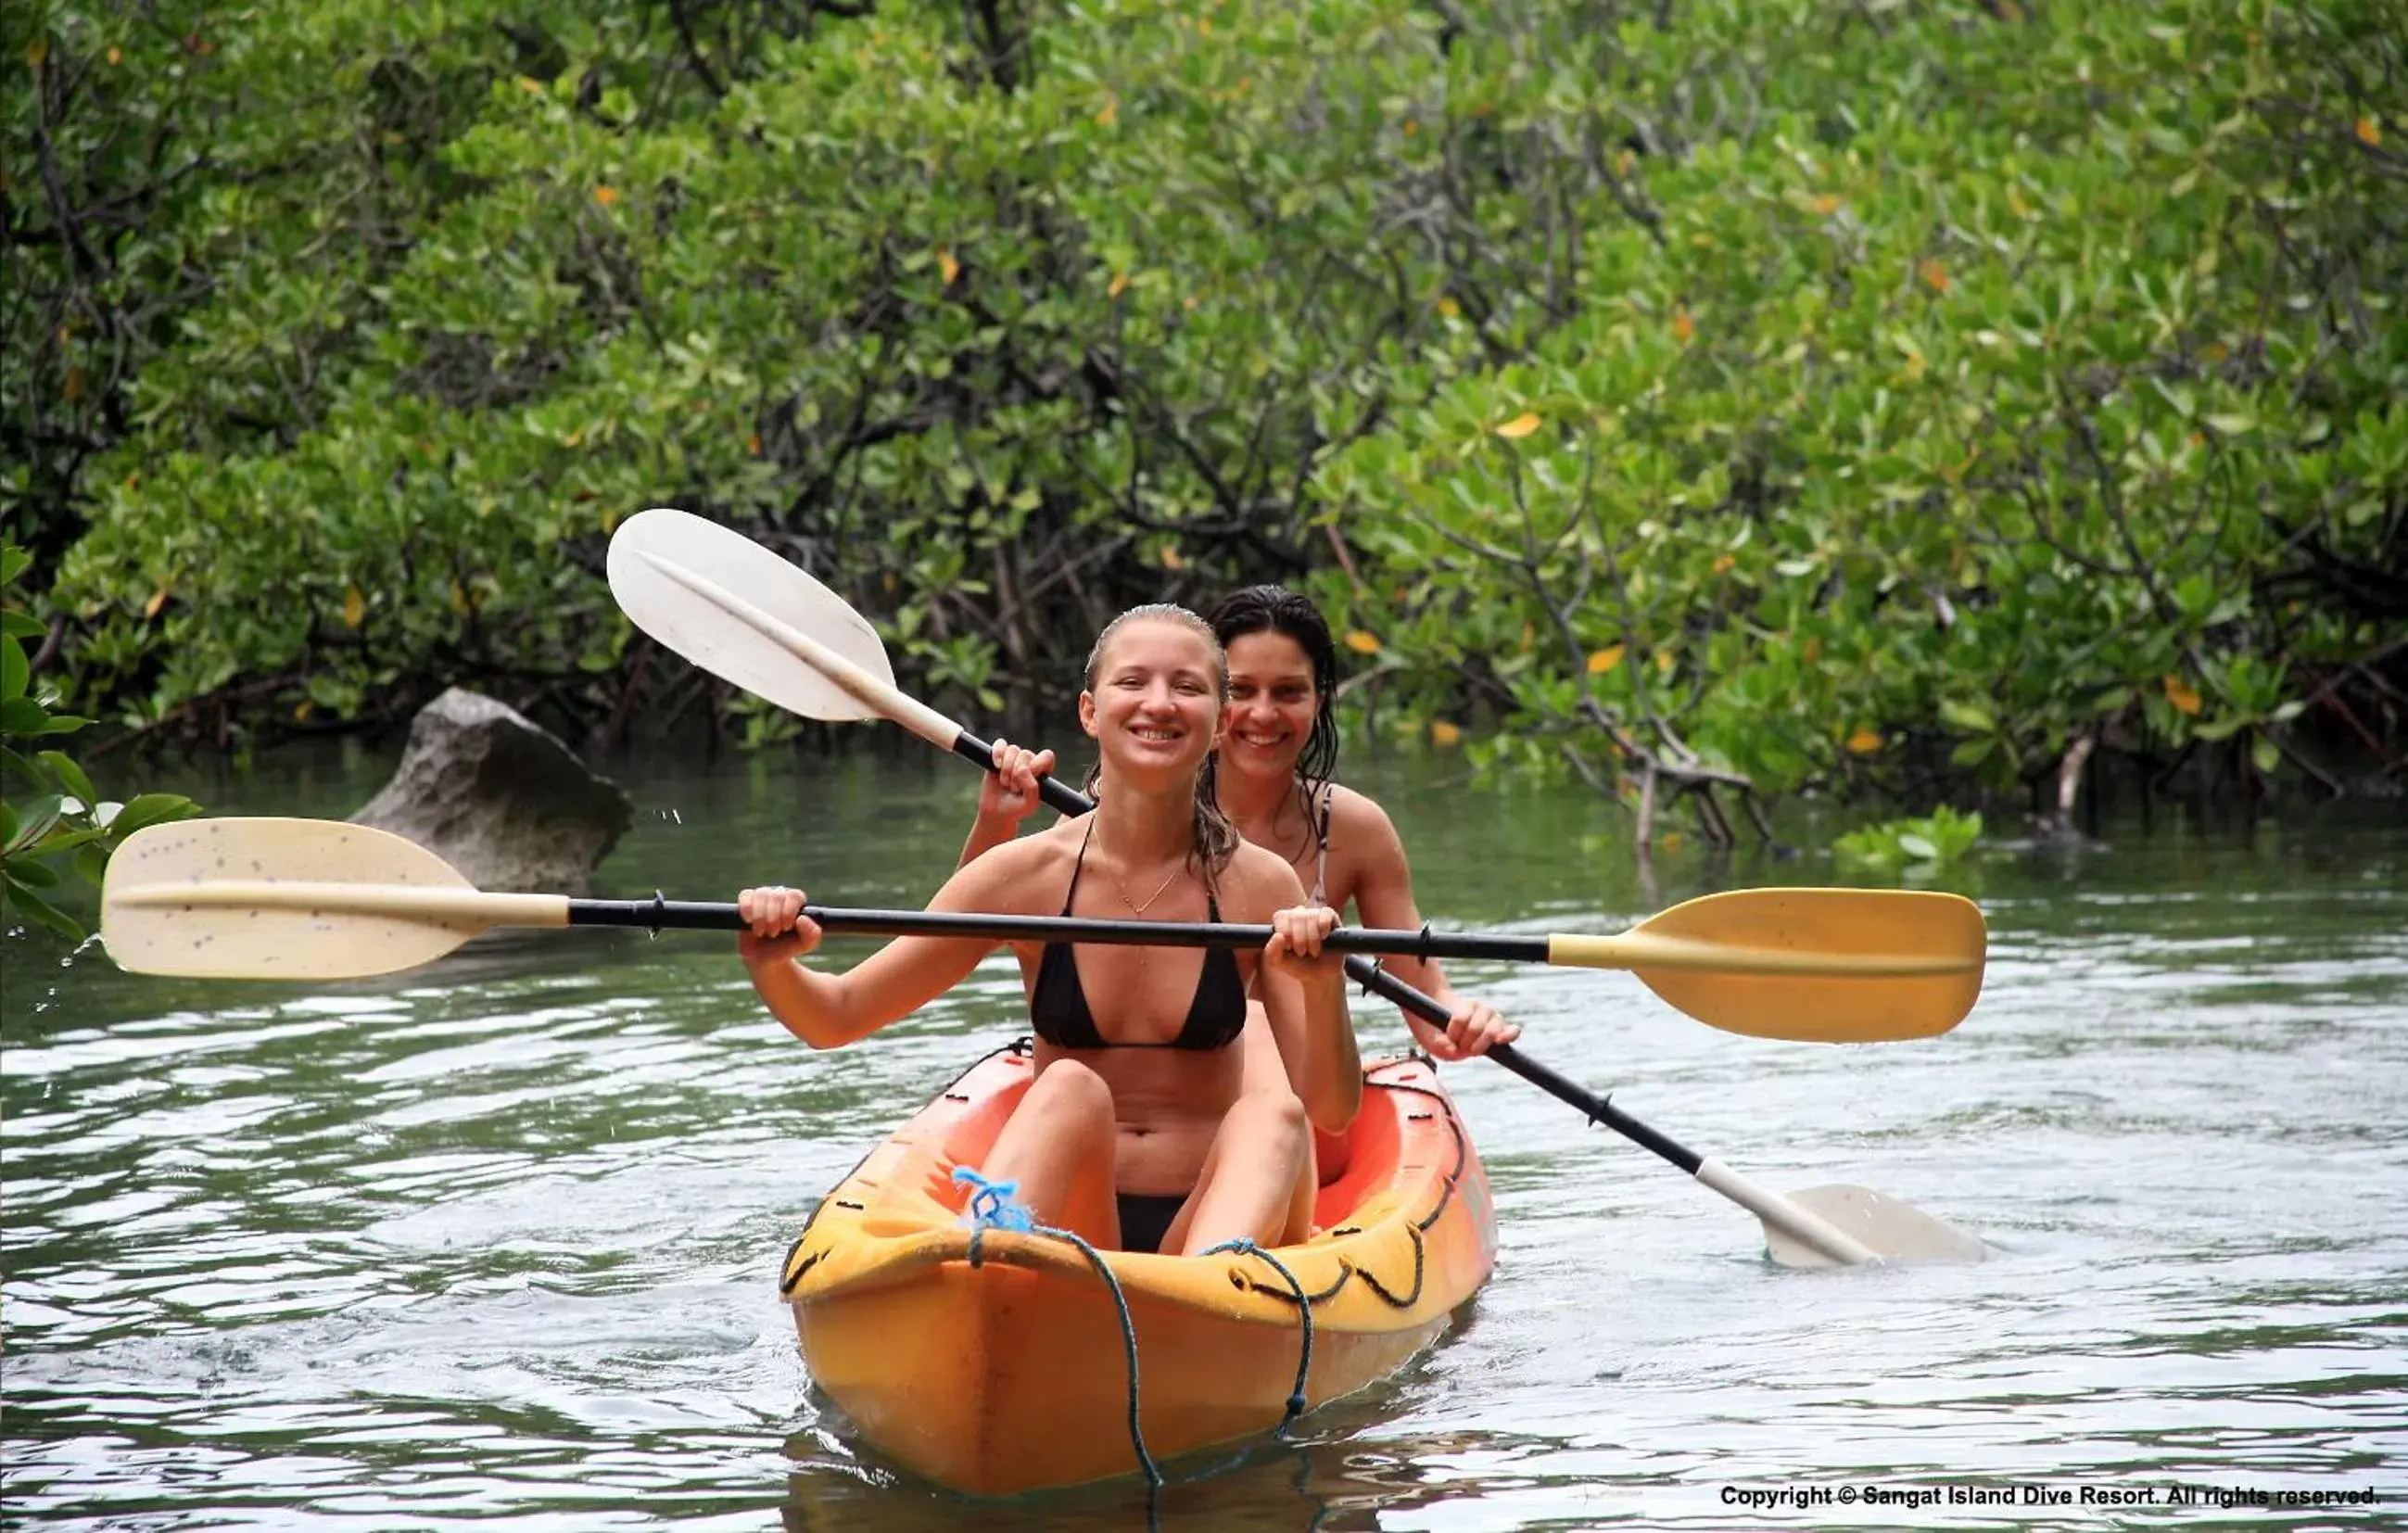 Canoeing in Sangat Island Dive Resort